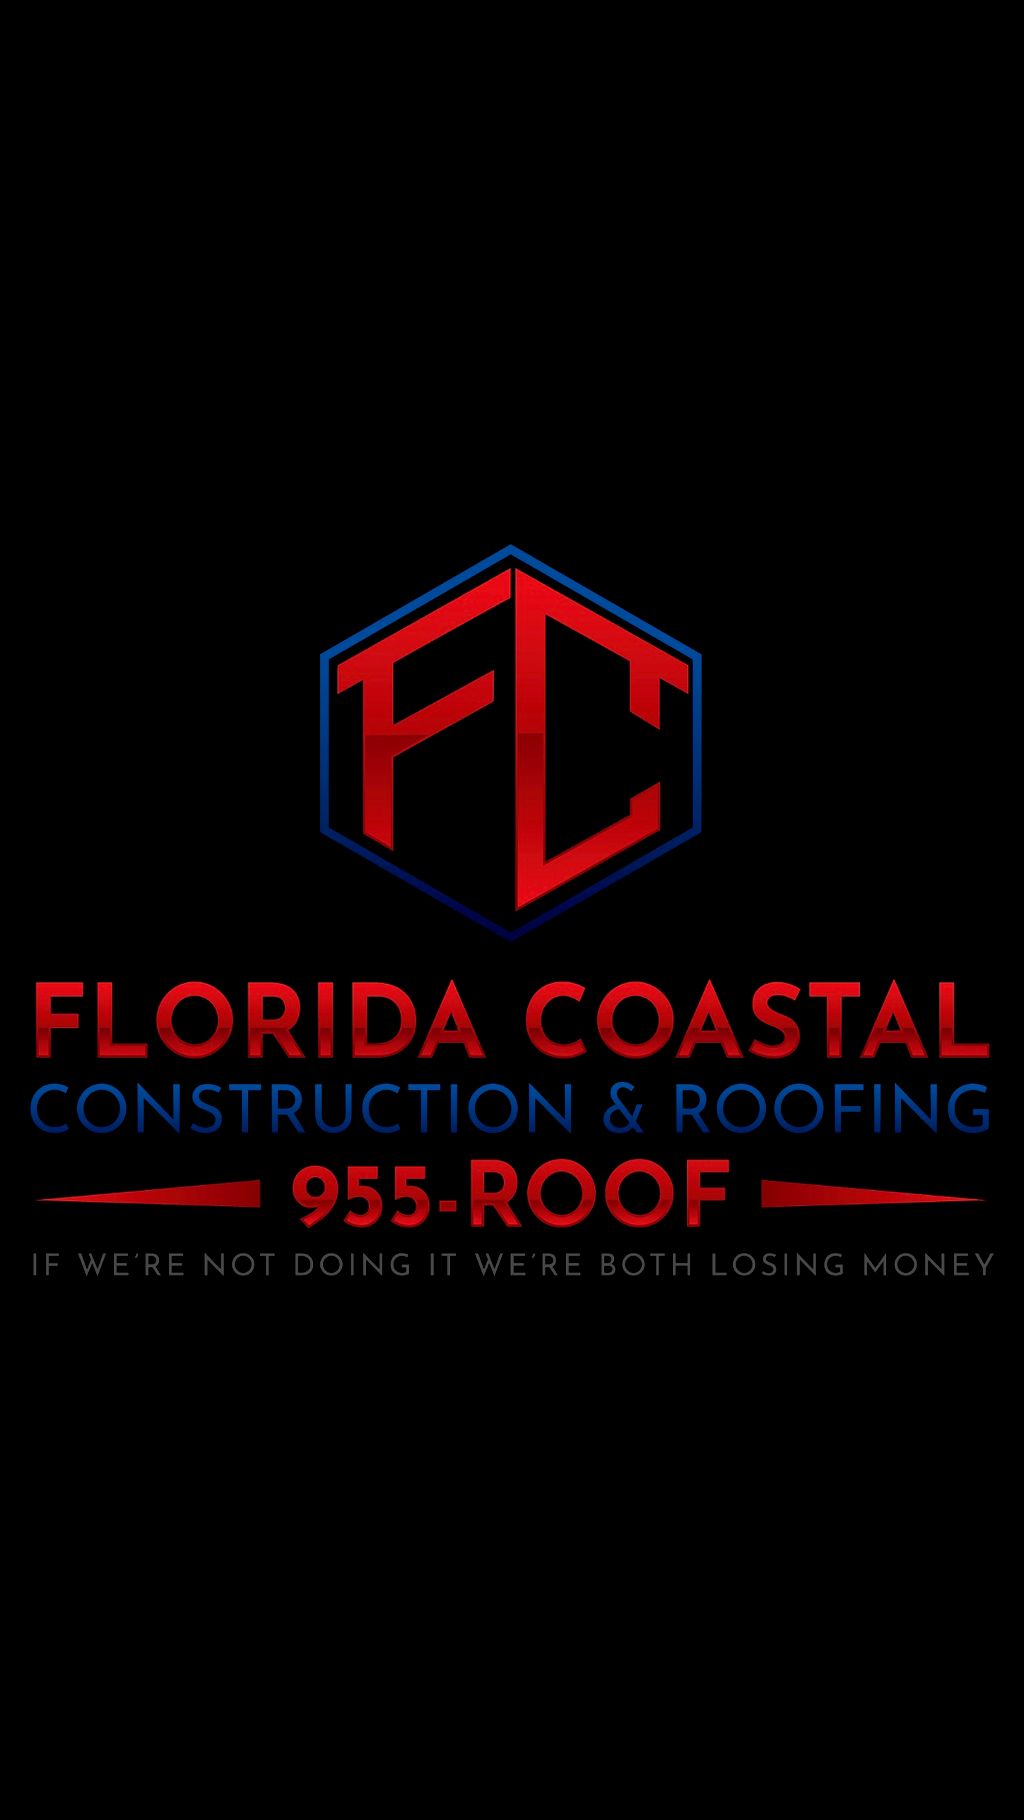 Florida Coastal Construction Services Inc.